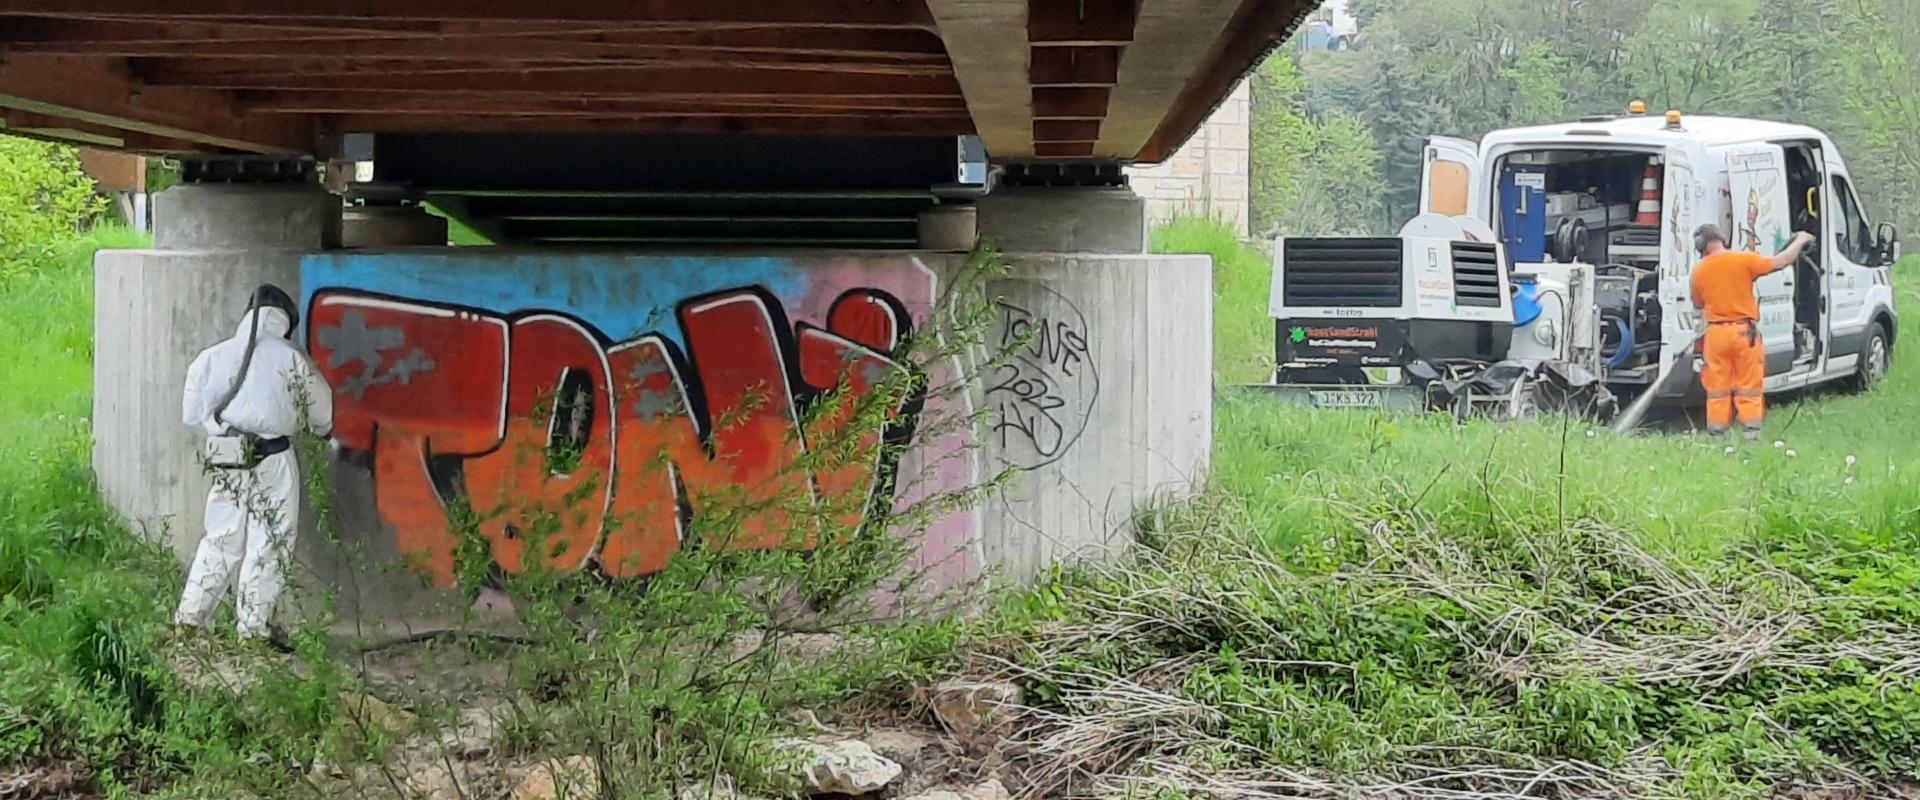 Graffiti removal on the Hausberg bridge